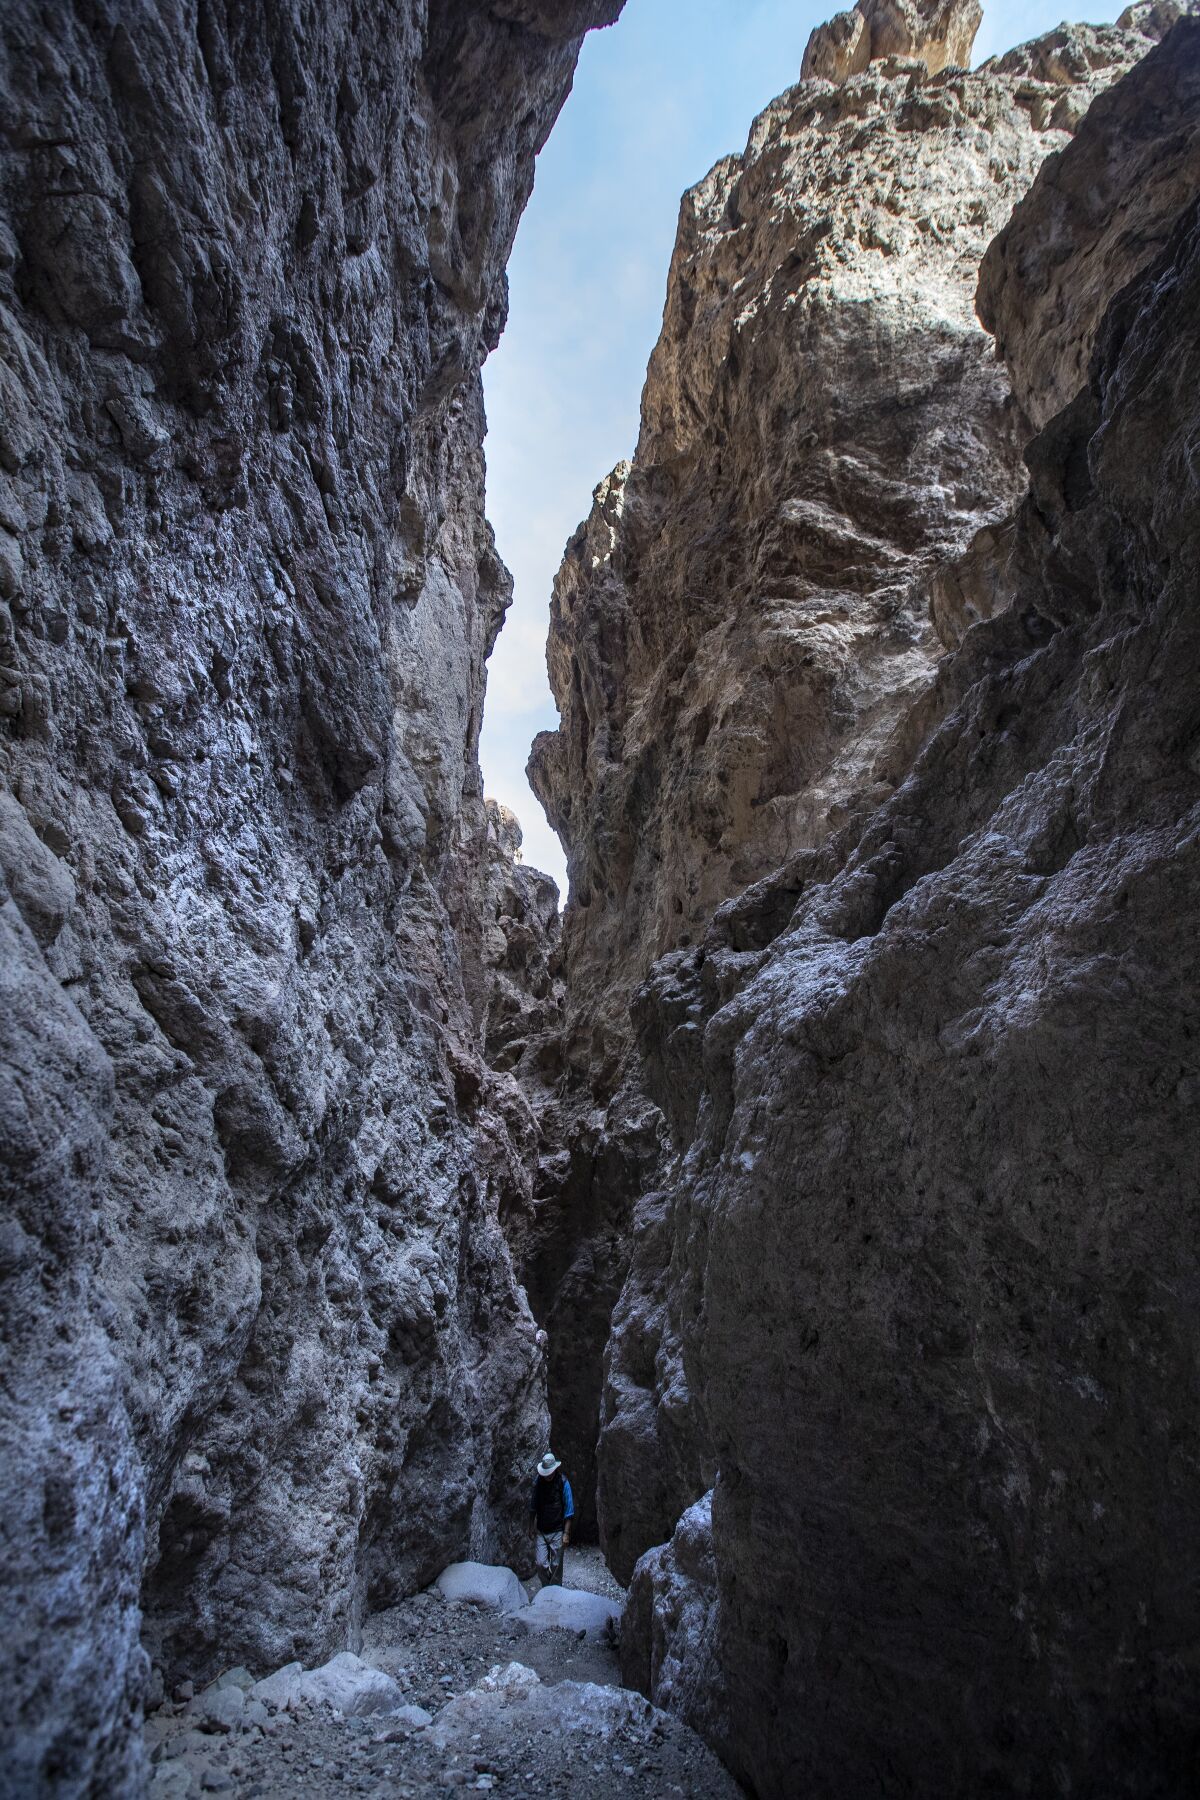 A hiker climbs into Slot Canyon.